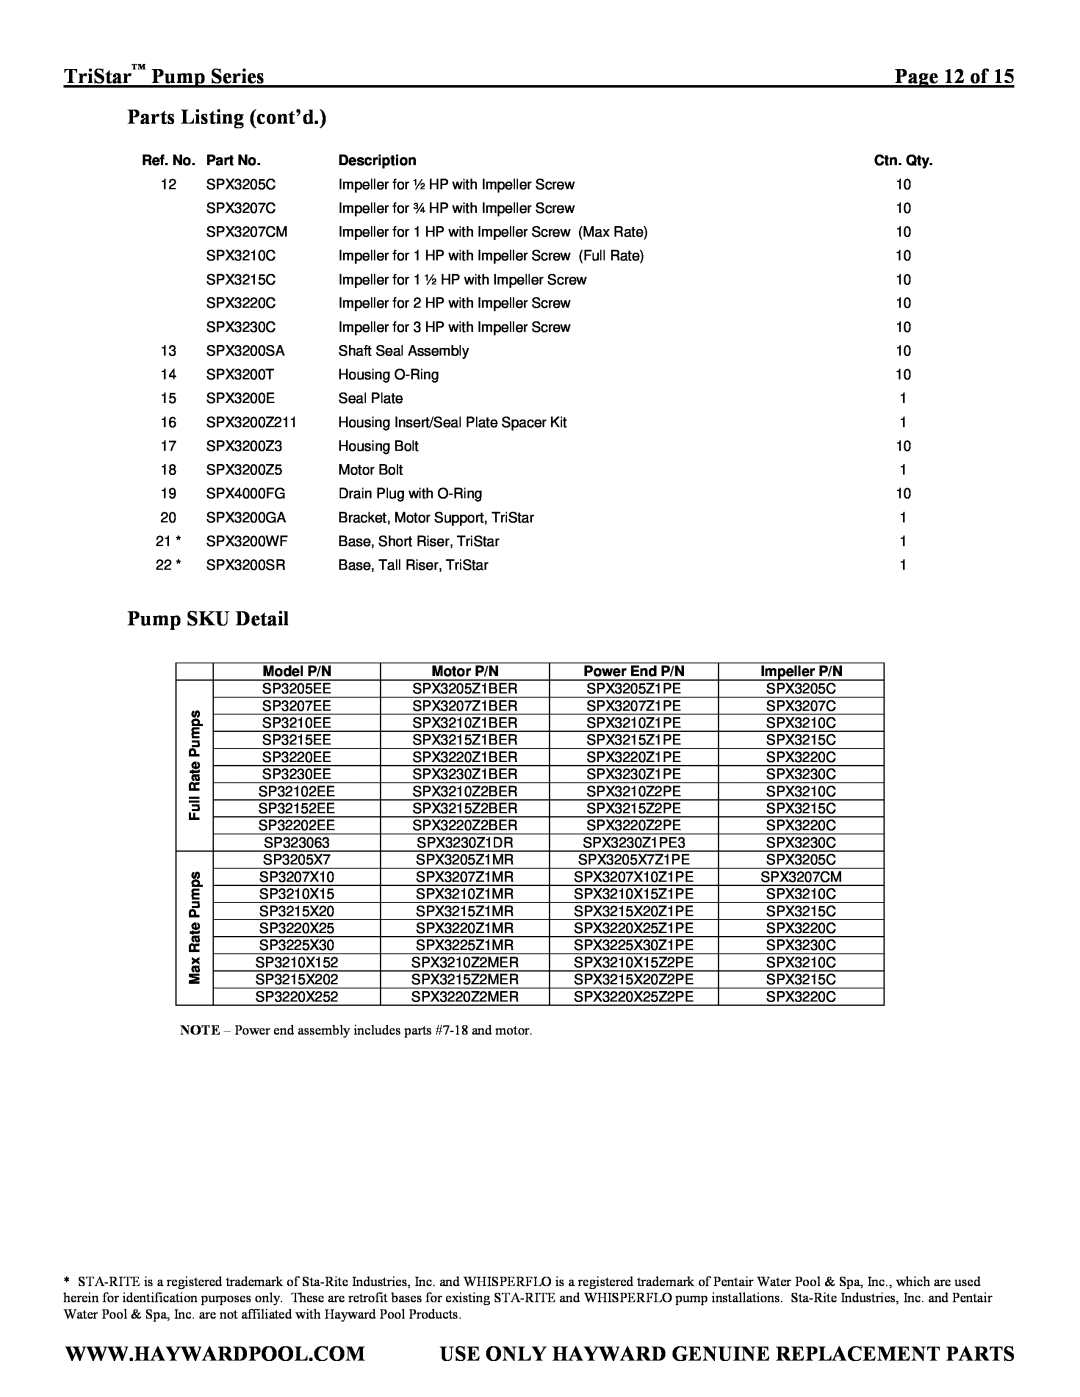 TriStar SP3007EEAZ Page 12 of, Parts Listing cont’d, Pump SKU Detail, TriStar Pump Series, Ref. No, Description, Ctn. Qty 